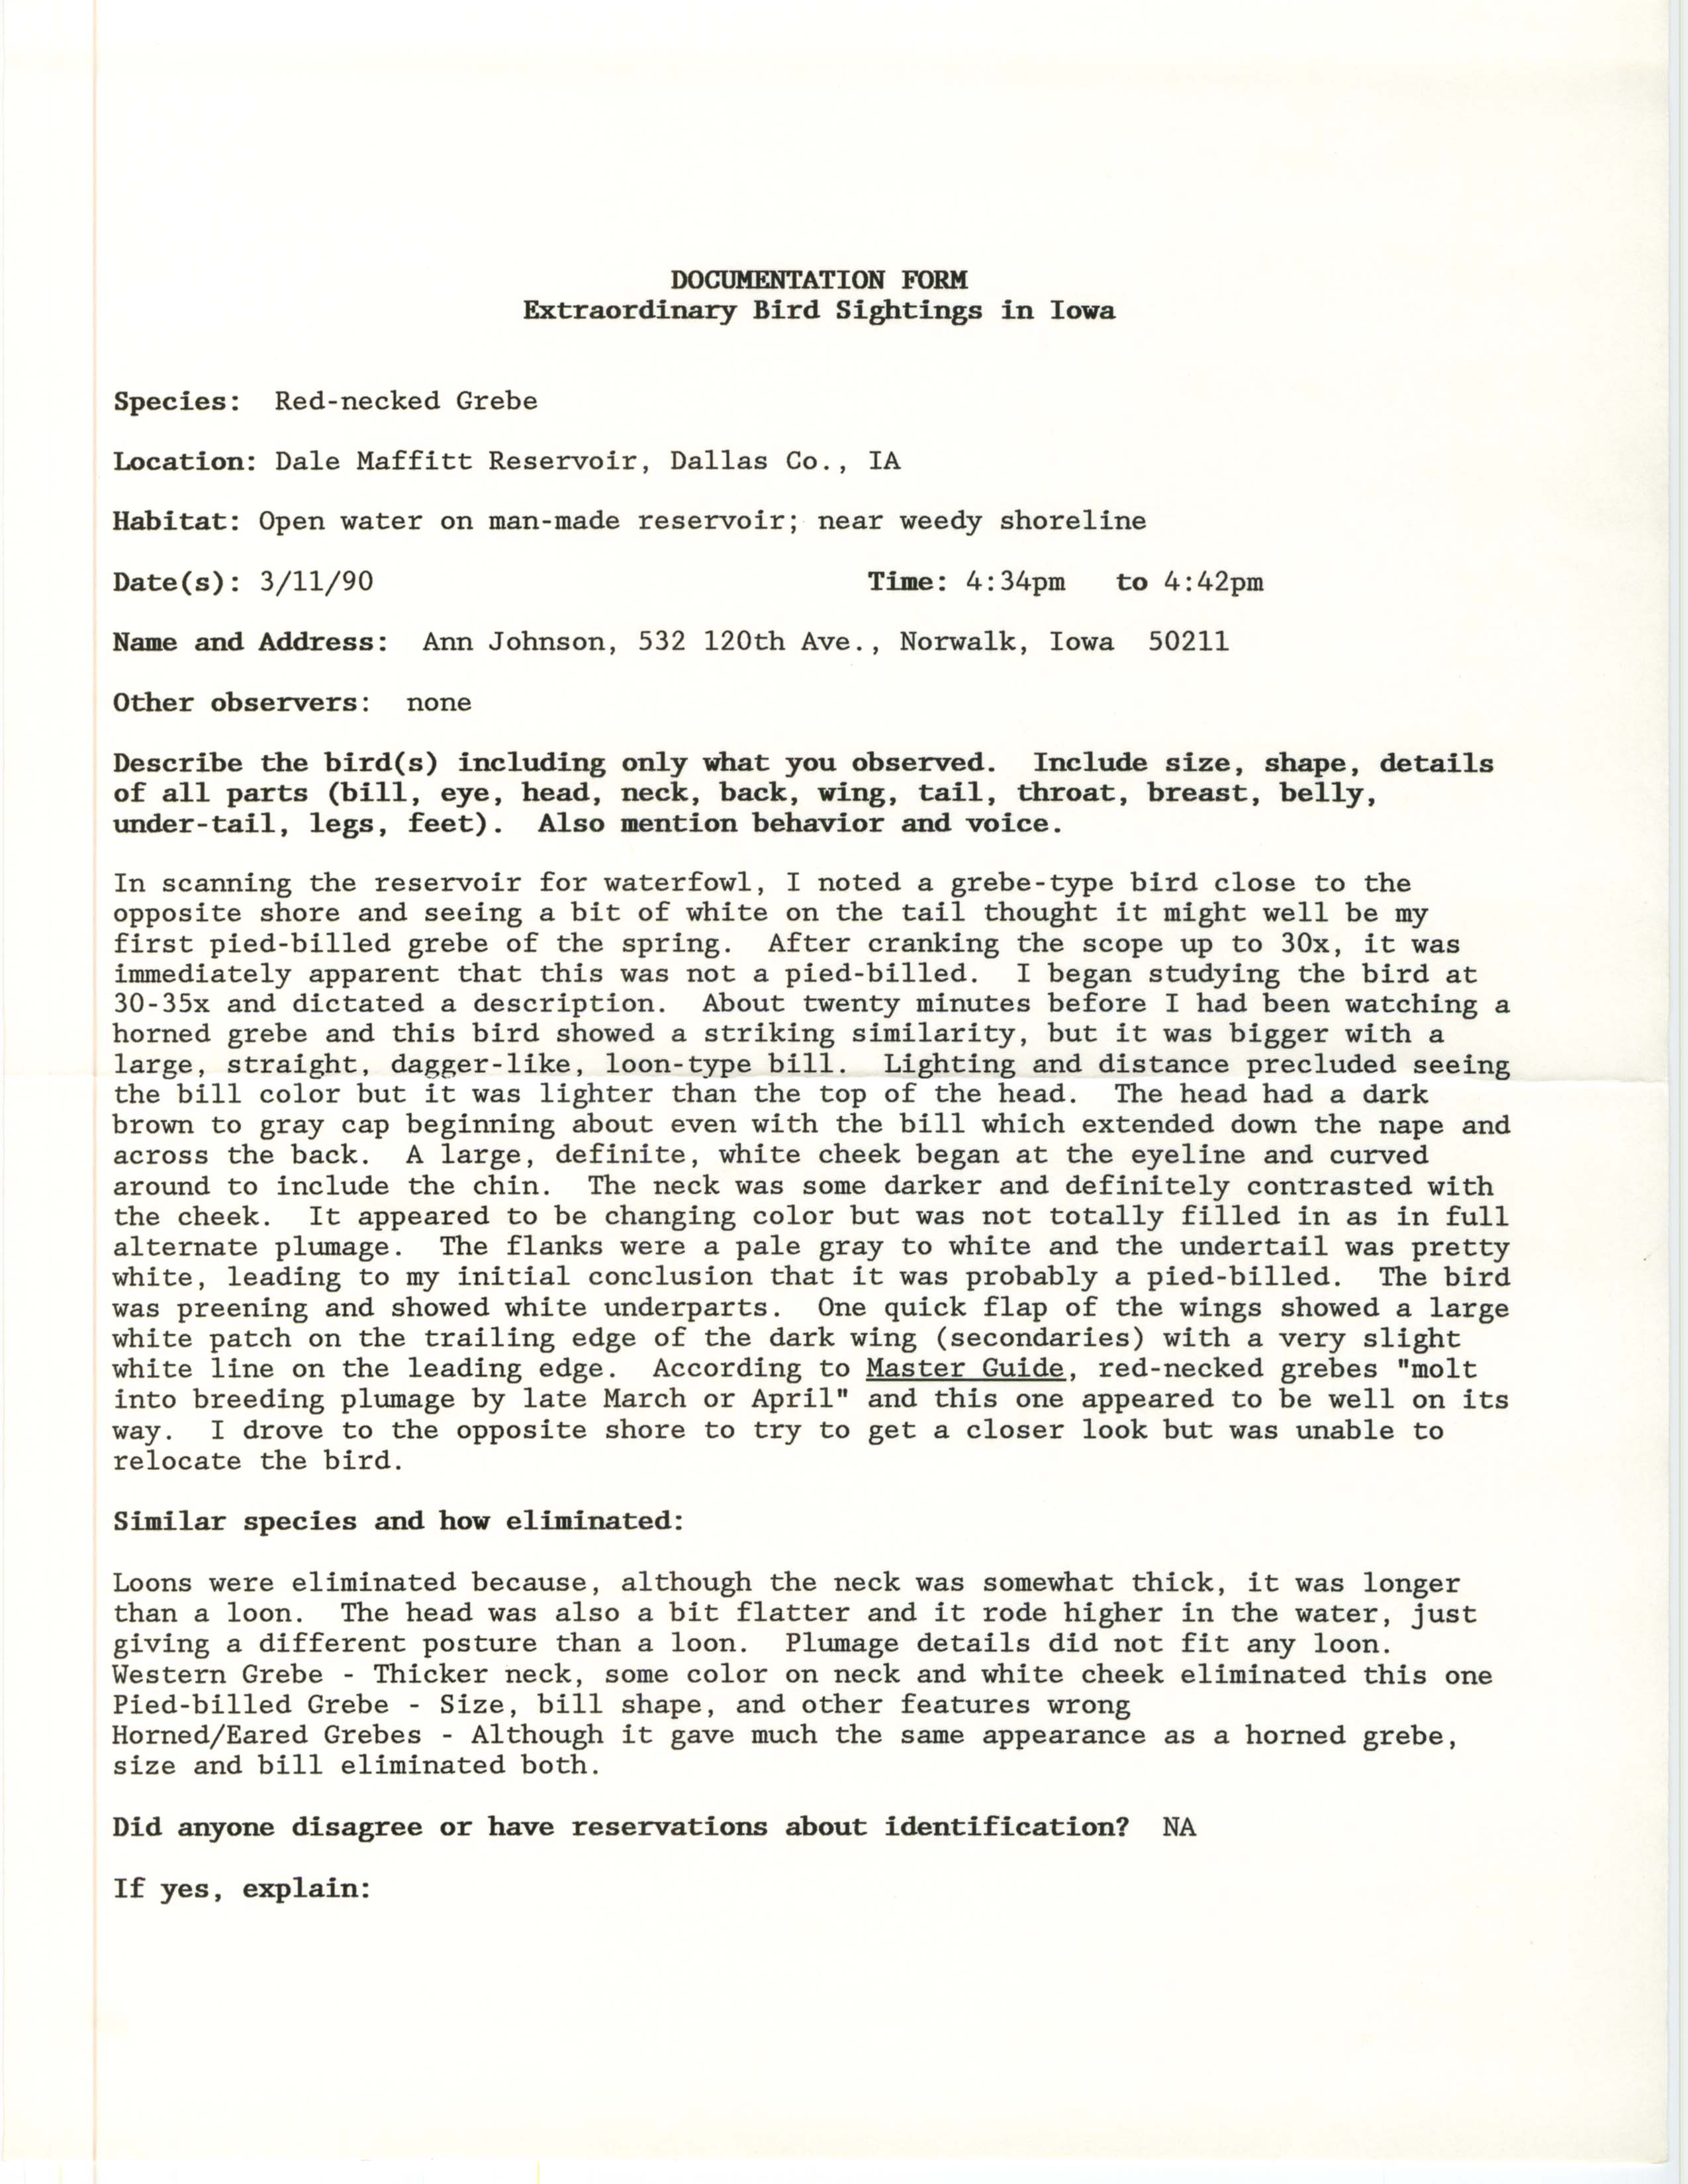 Rare bird documentation form for Red-necked Grebe at Dale Maffitt Reservoir, 1990